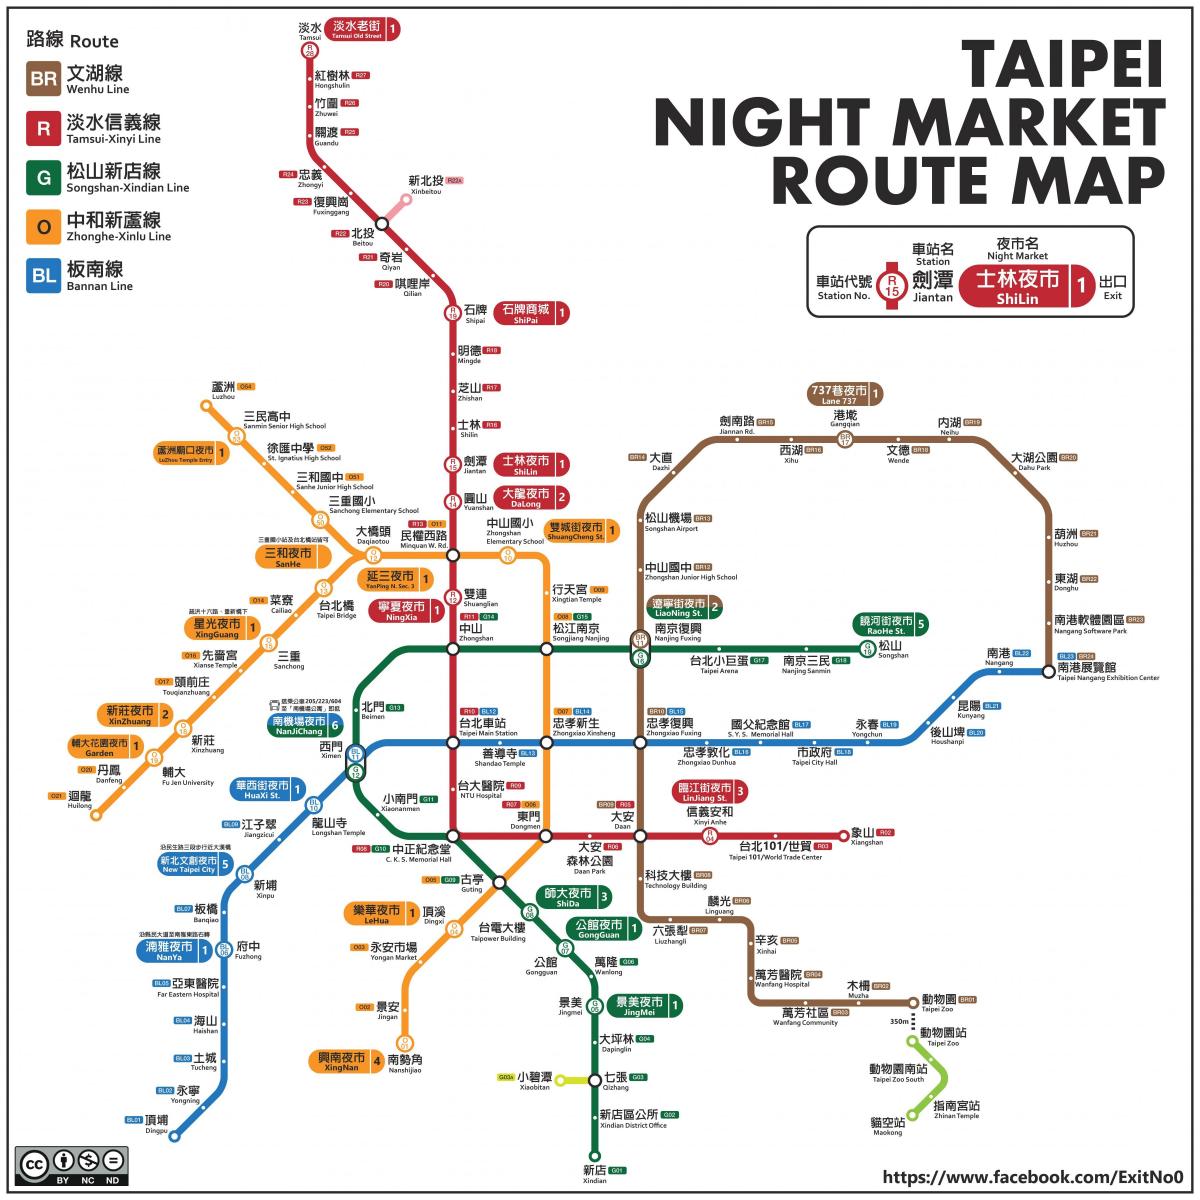 zemljevid Taipei noč trgi